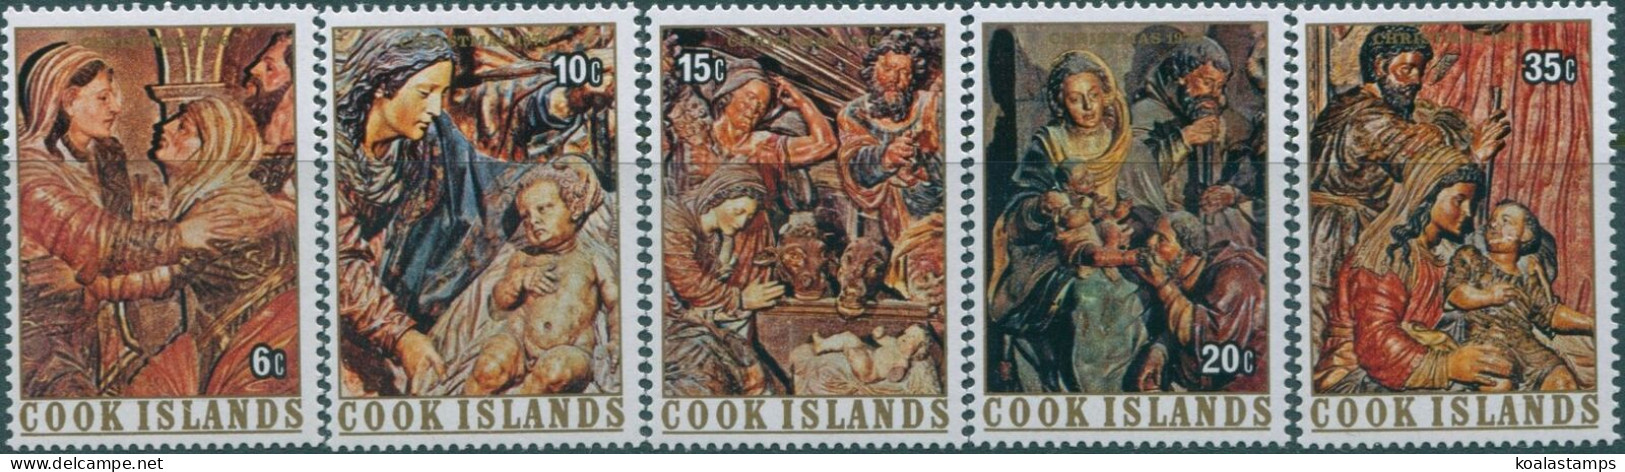 Cook Islands 1976 SG556-560 Christmas Set MNH - Cookinseln